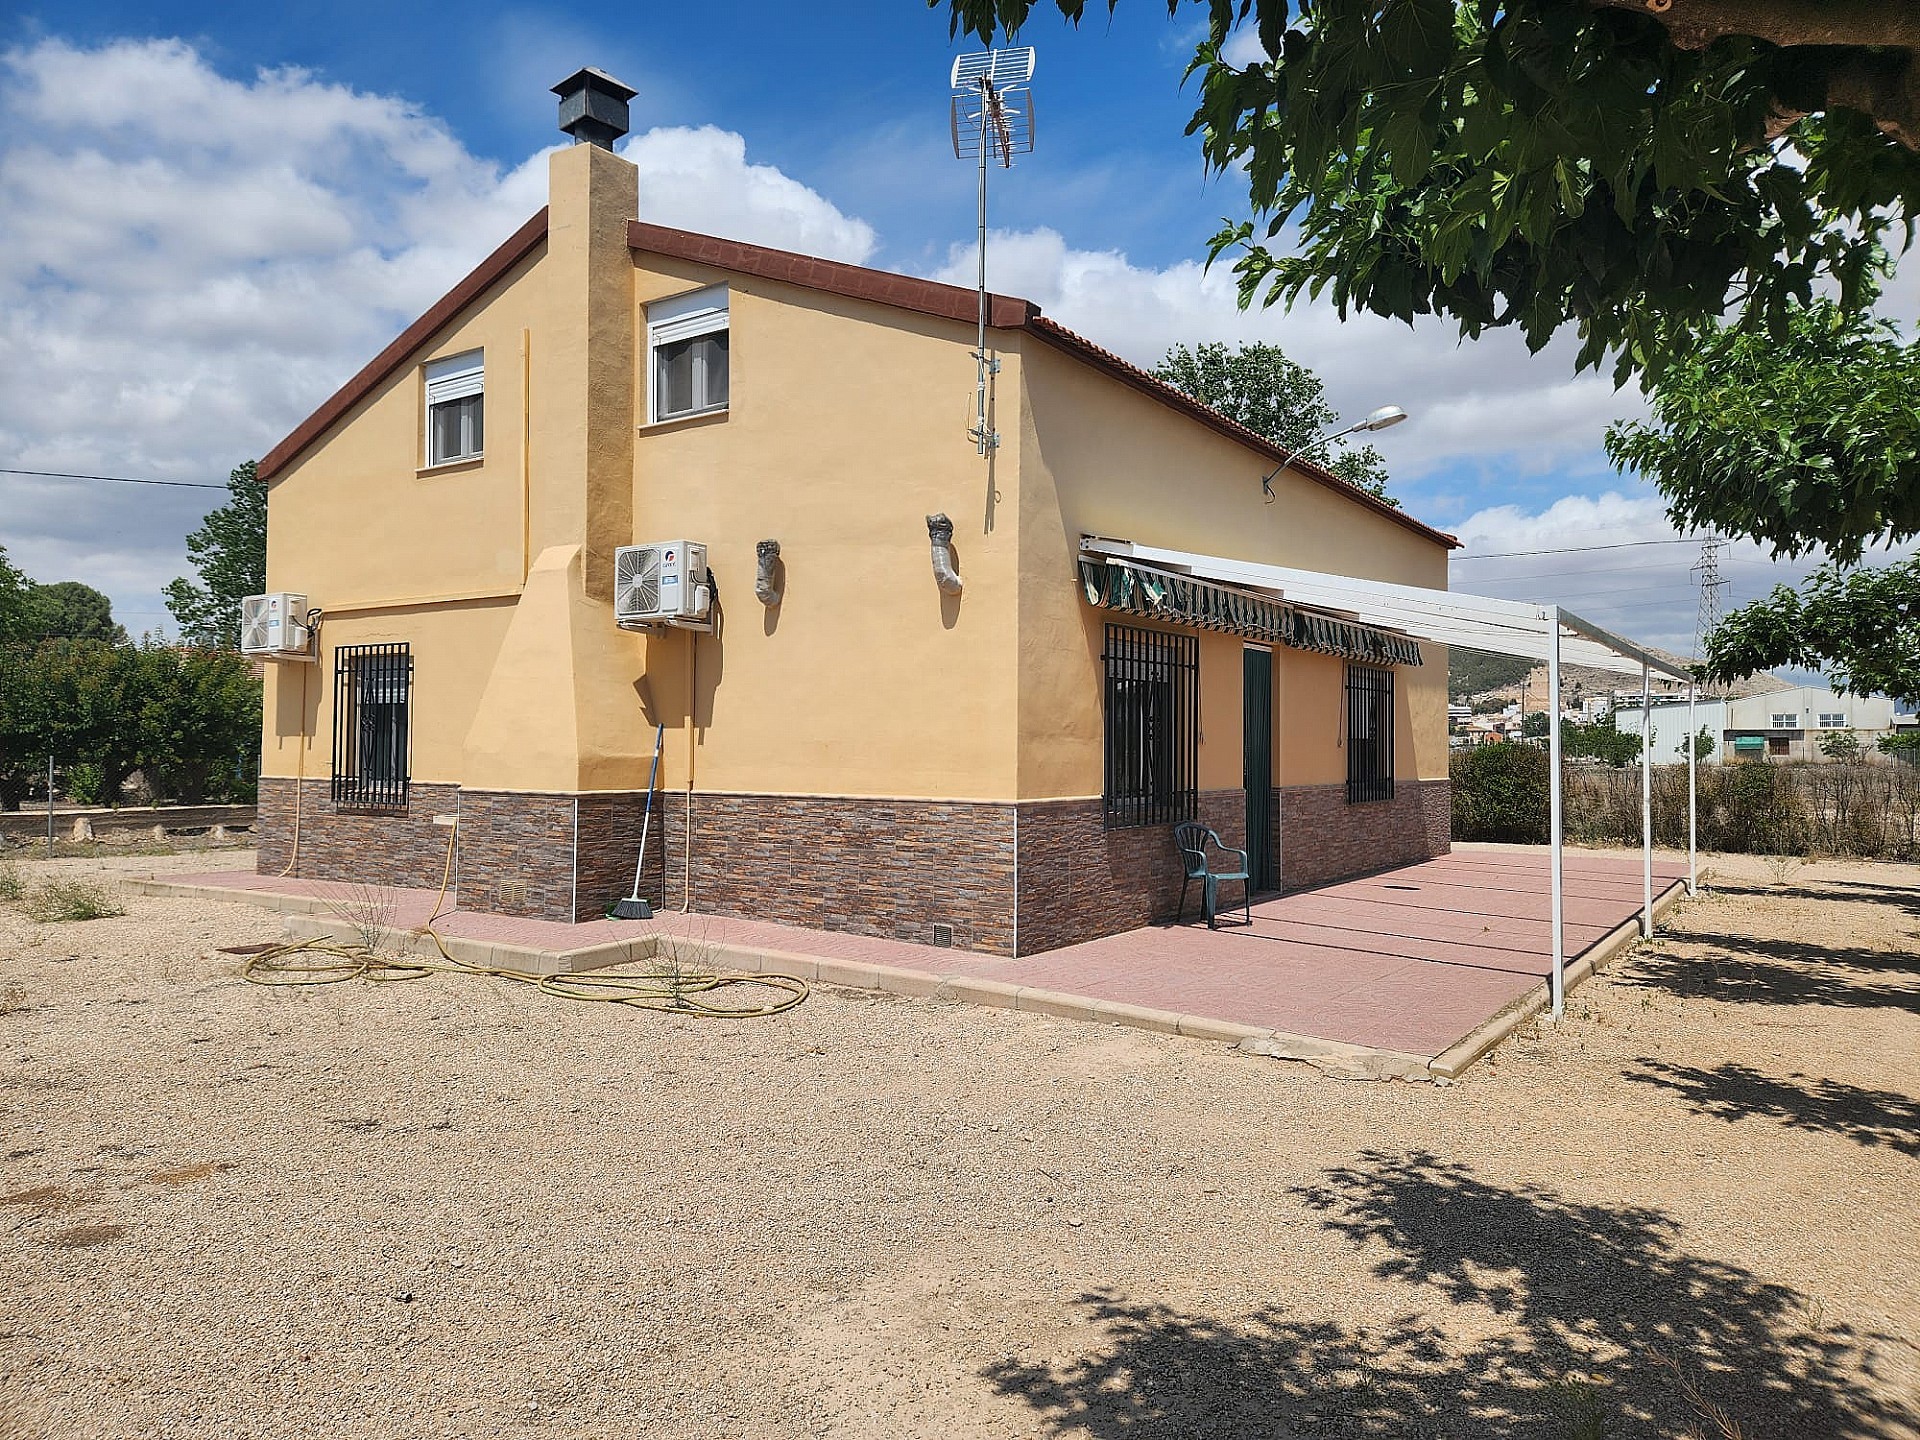 1 bedroom house / villa for sale in Villena , Costa Blanca